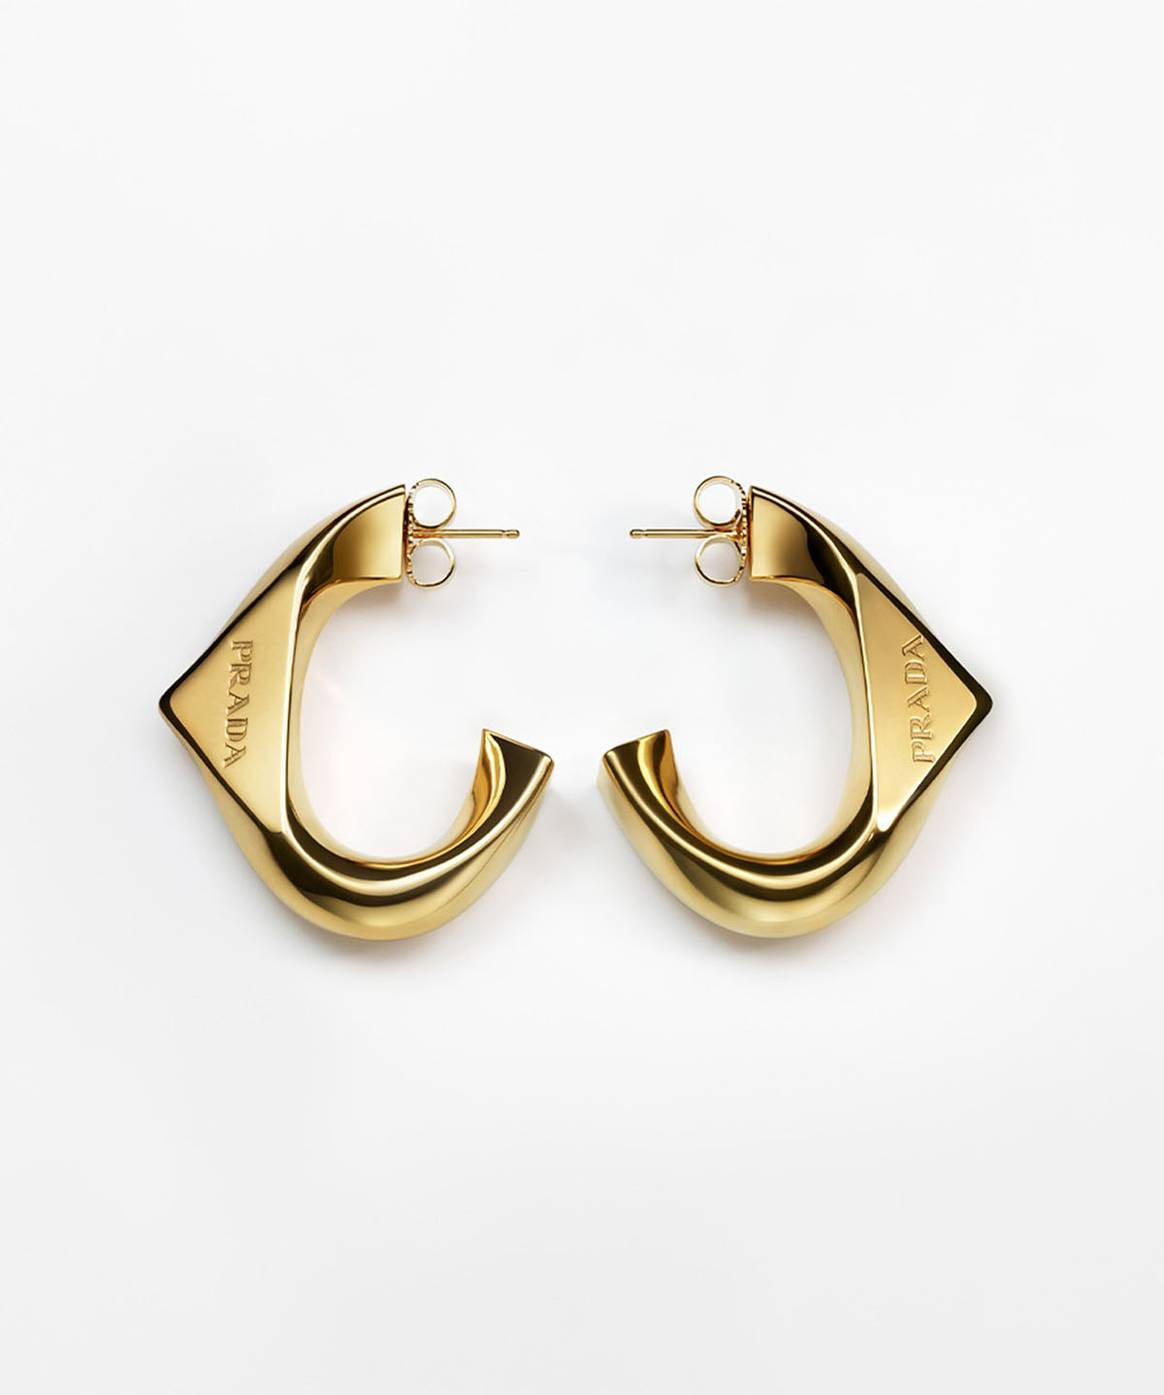 Photo Credits: Prada “Eternal Gold”, primera colección de alta joyería de Prada.